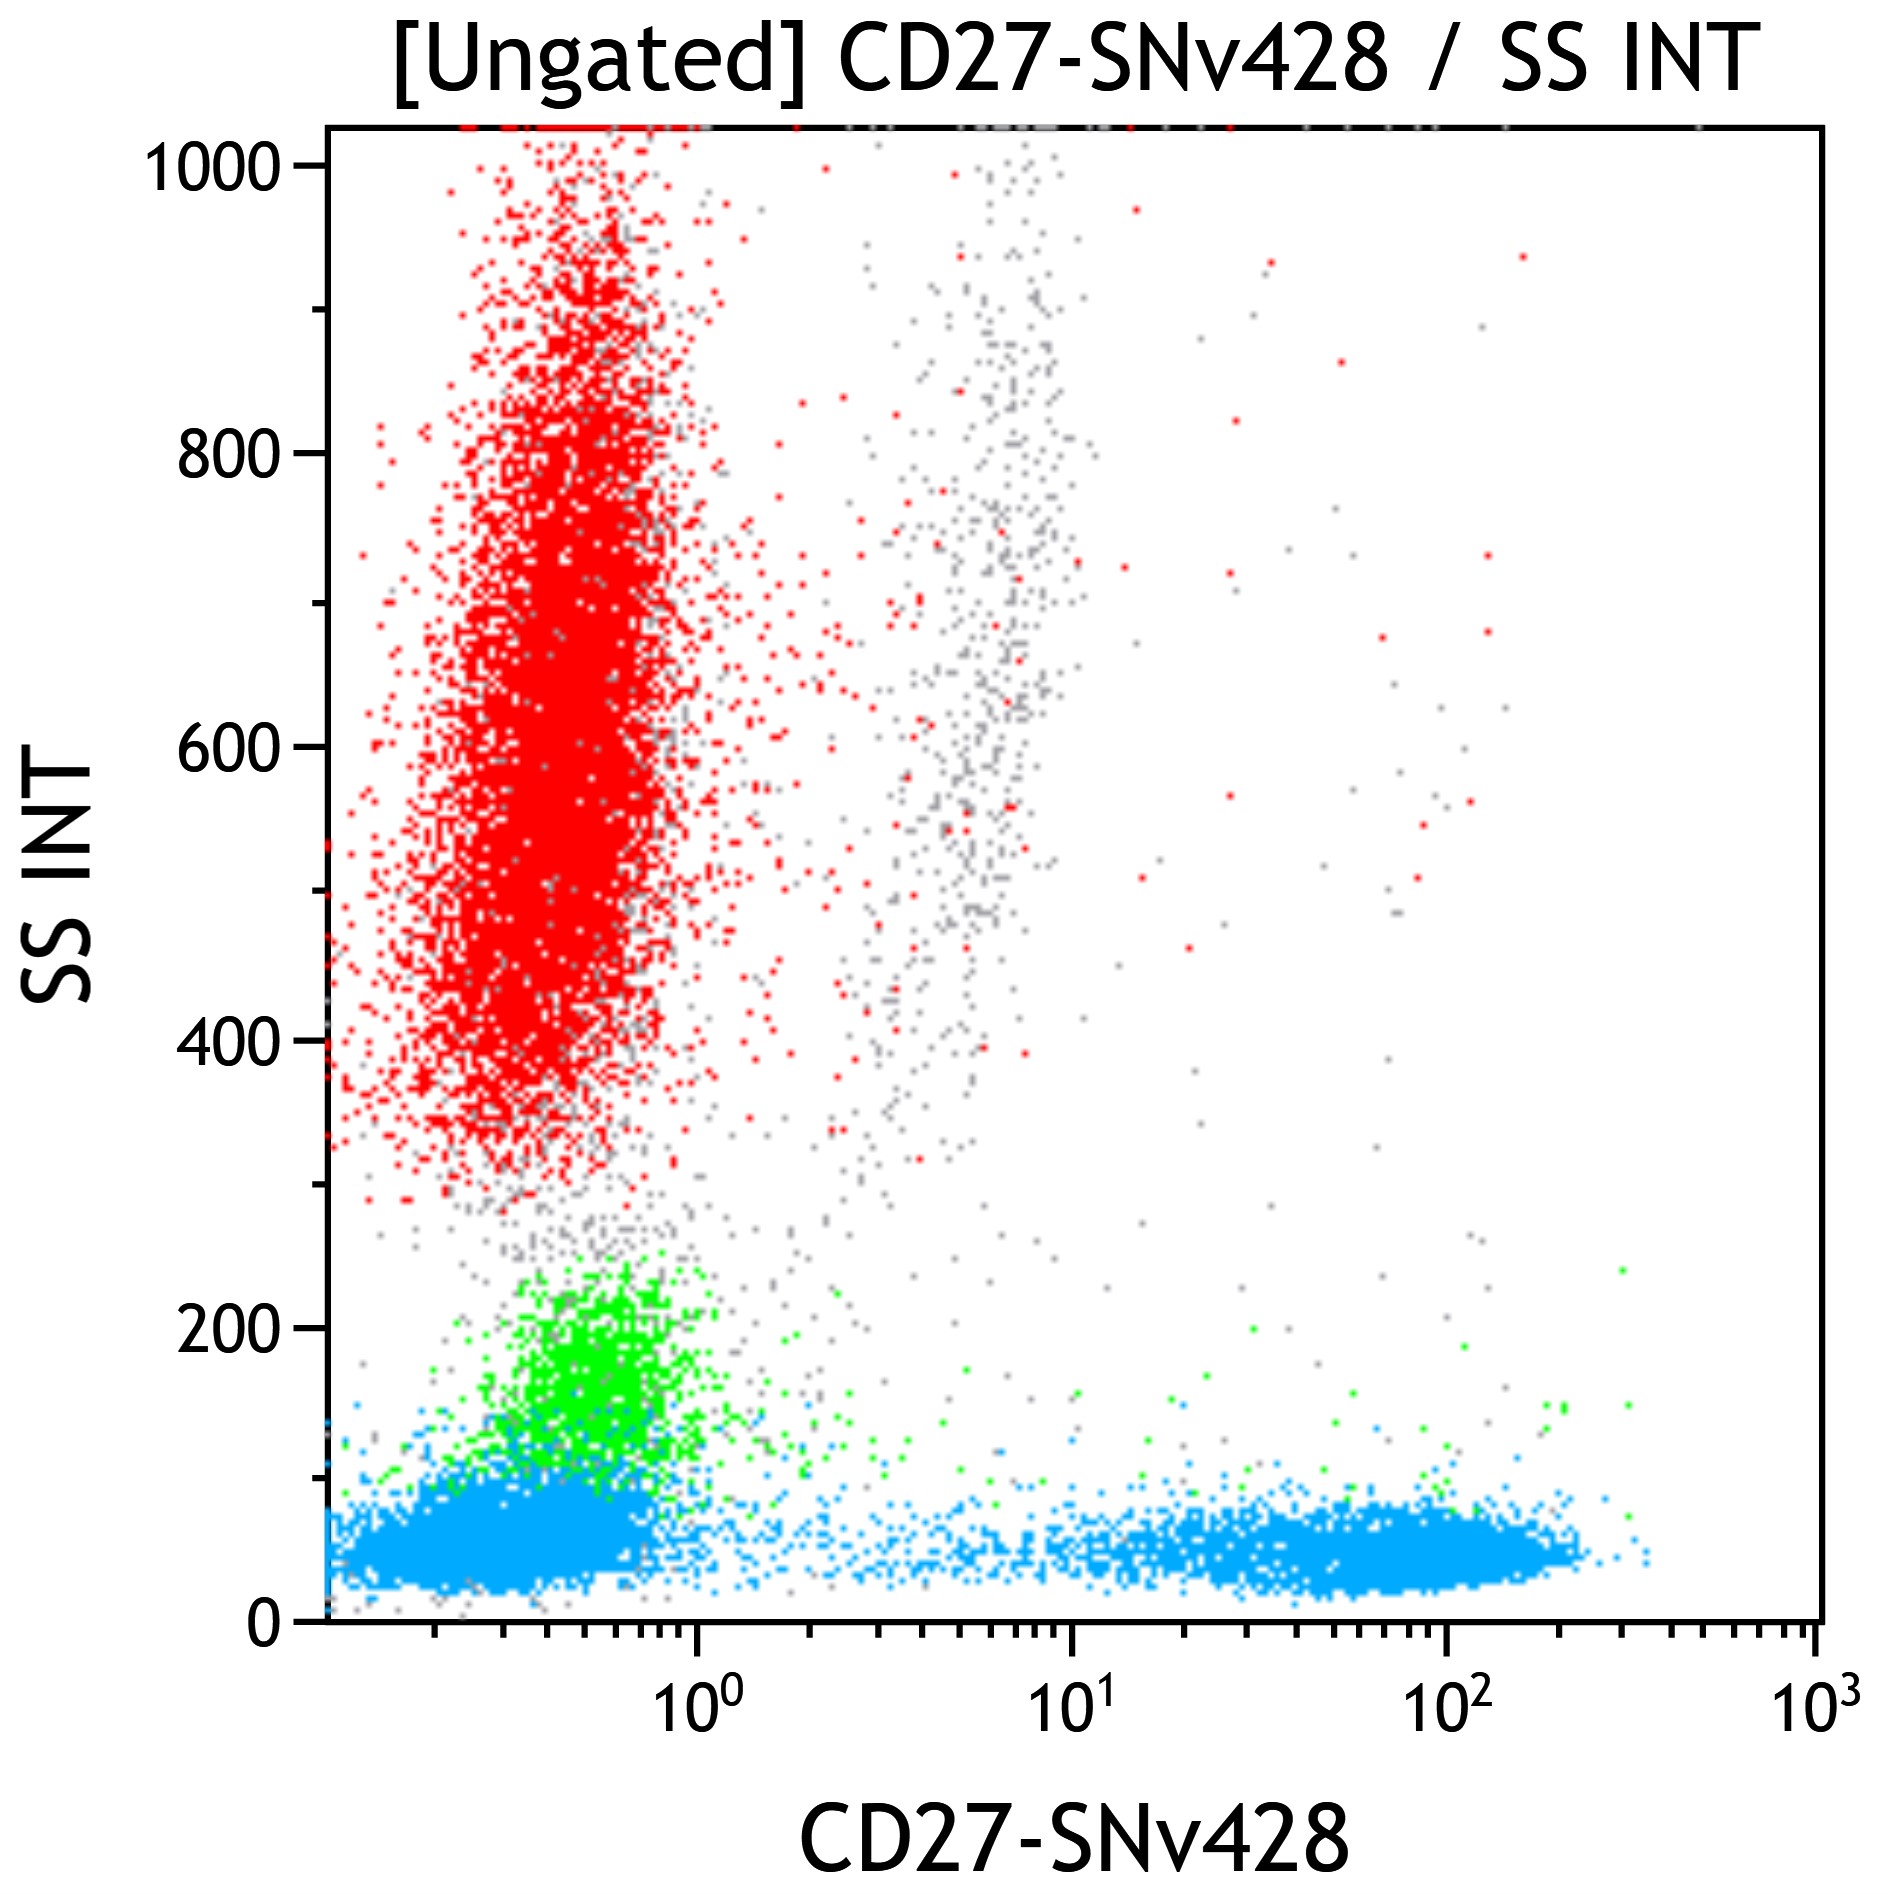 CD27 SNv428 C76825 dotplot